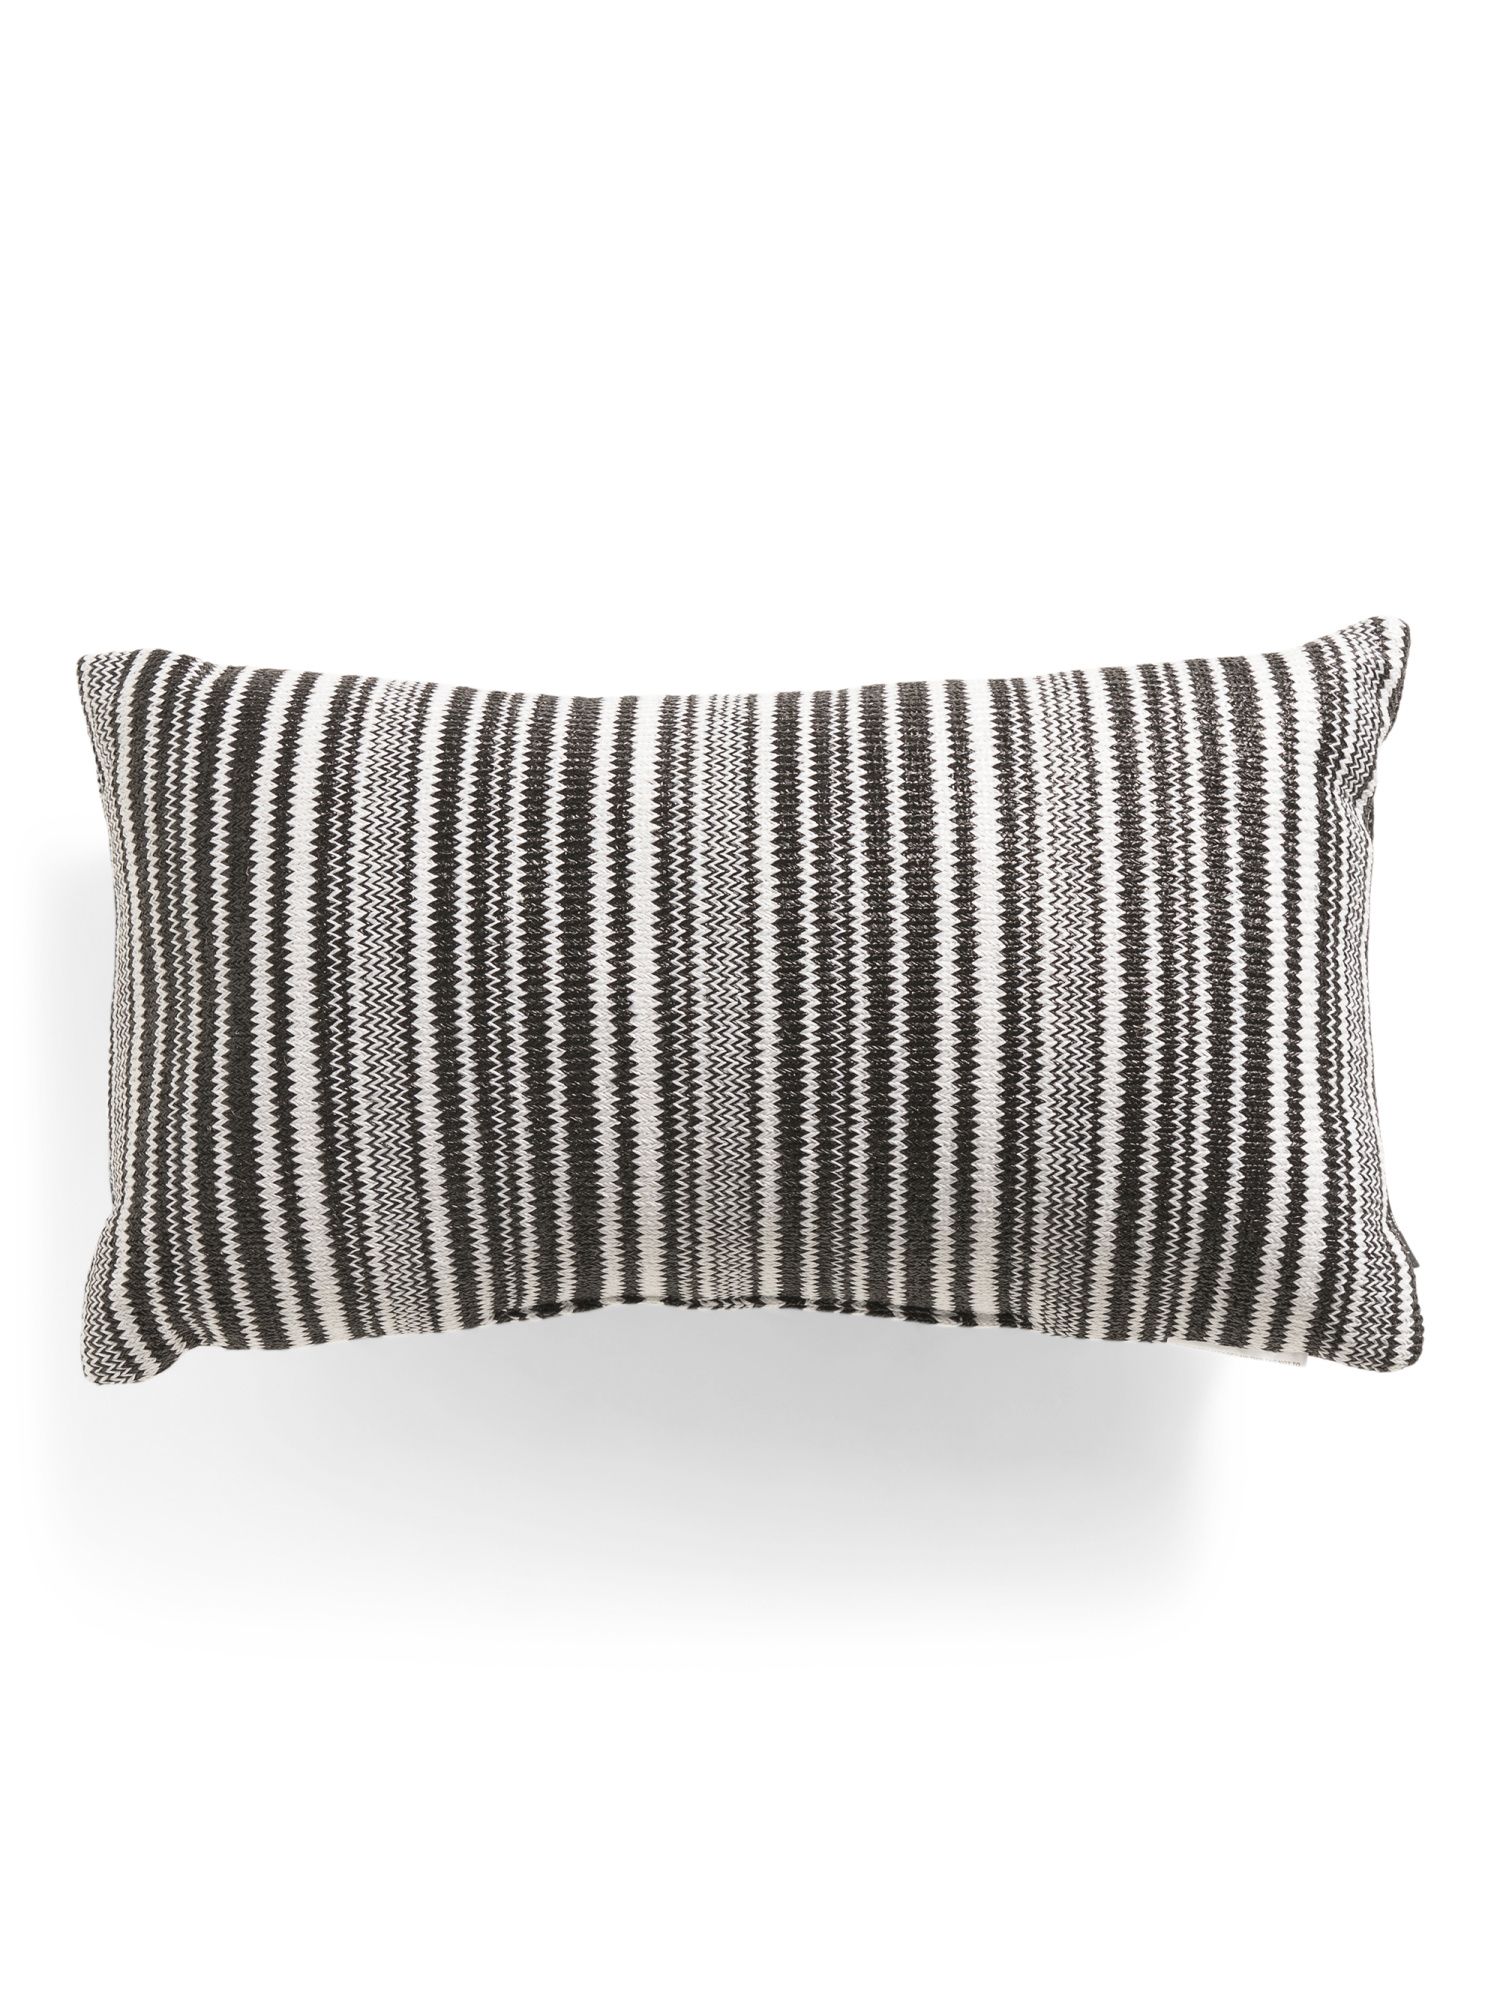 14x24 Outdoor Chevron Striped Pillow | Marshalls